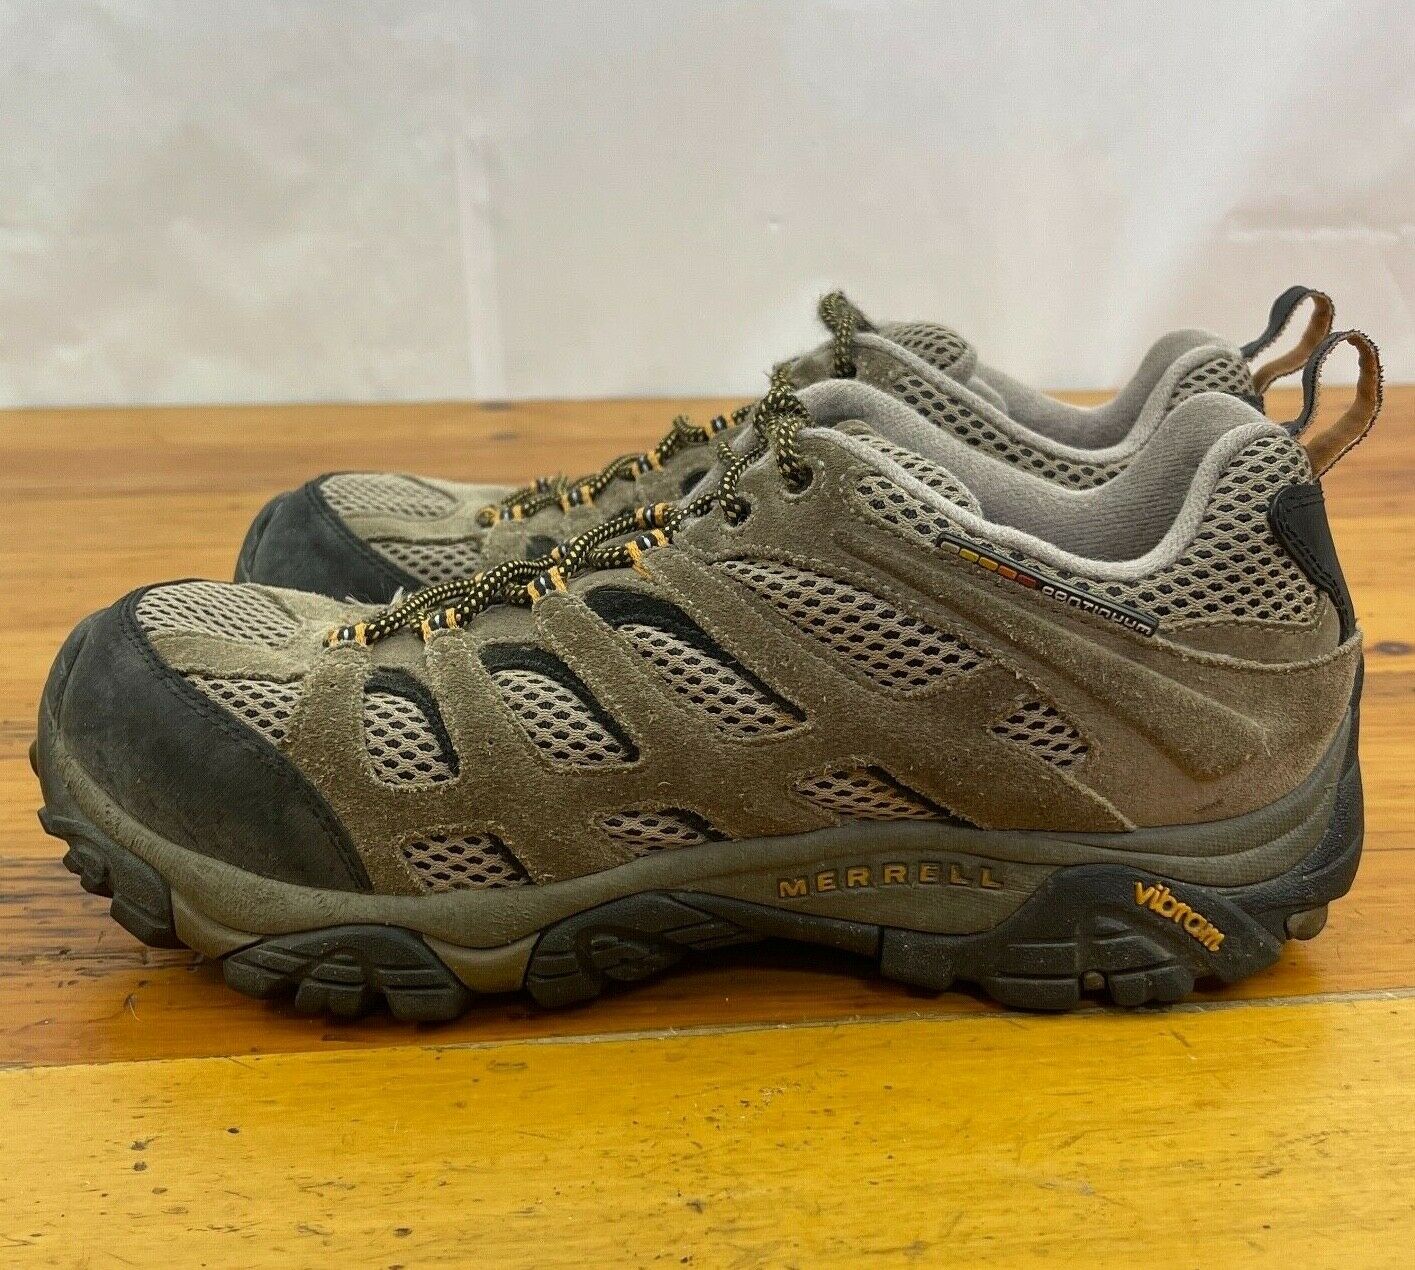 Merrell Mens Hiking Trail Walking Shoes Continuum Vibram Soles Size 10.5